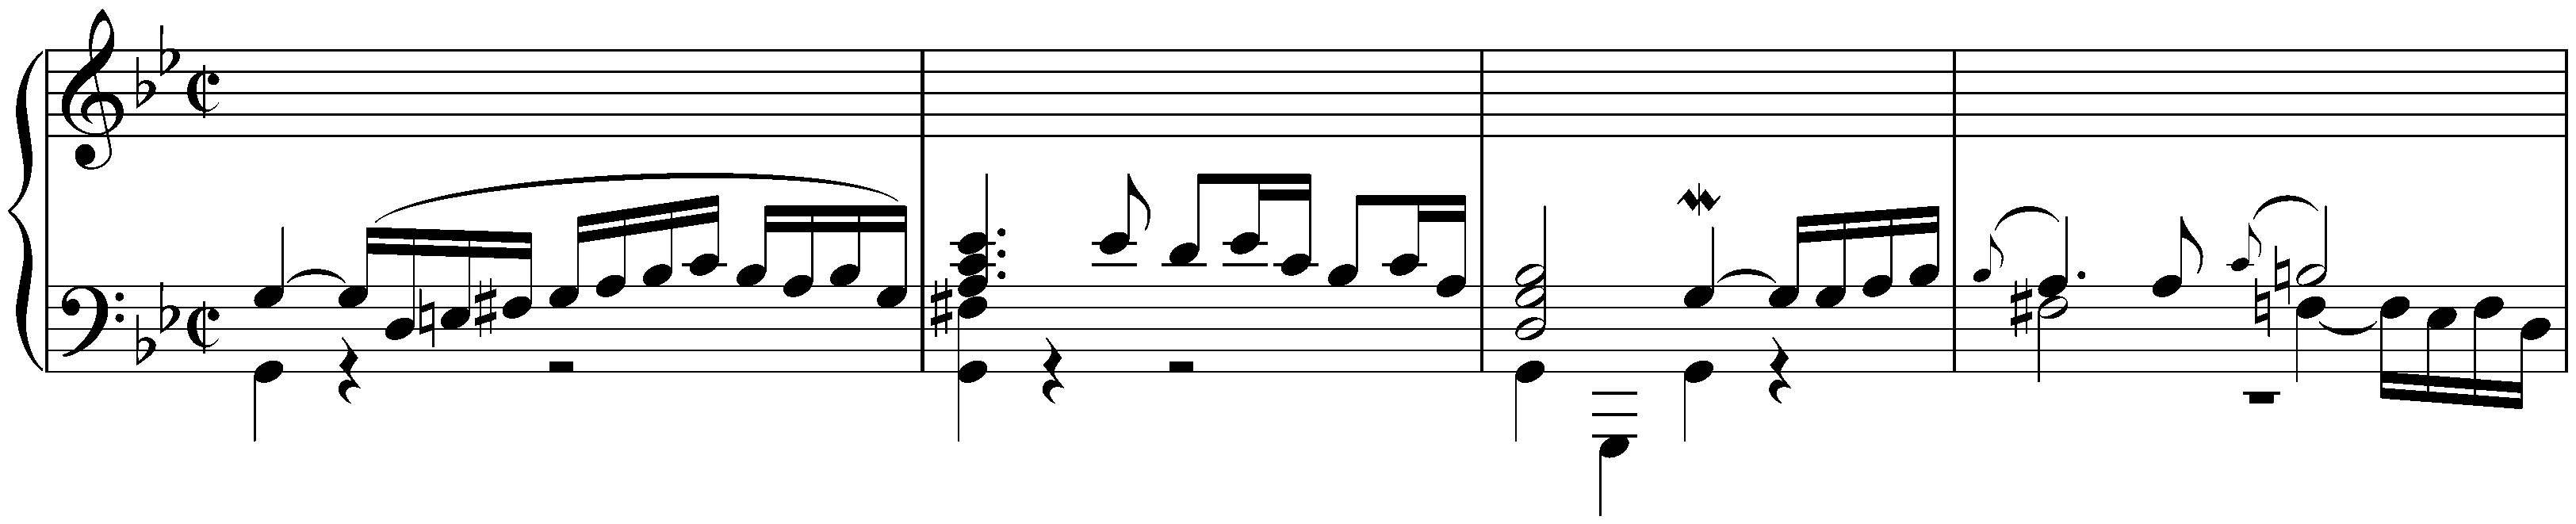 Suite in G minor, BWV 995; 1. Prelude